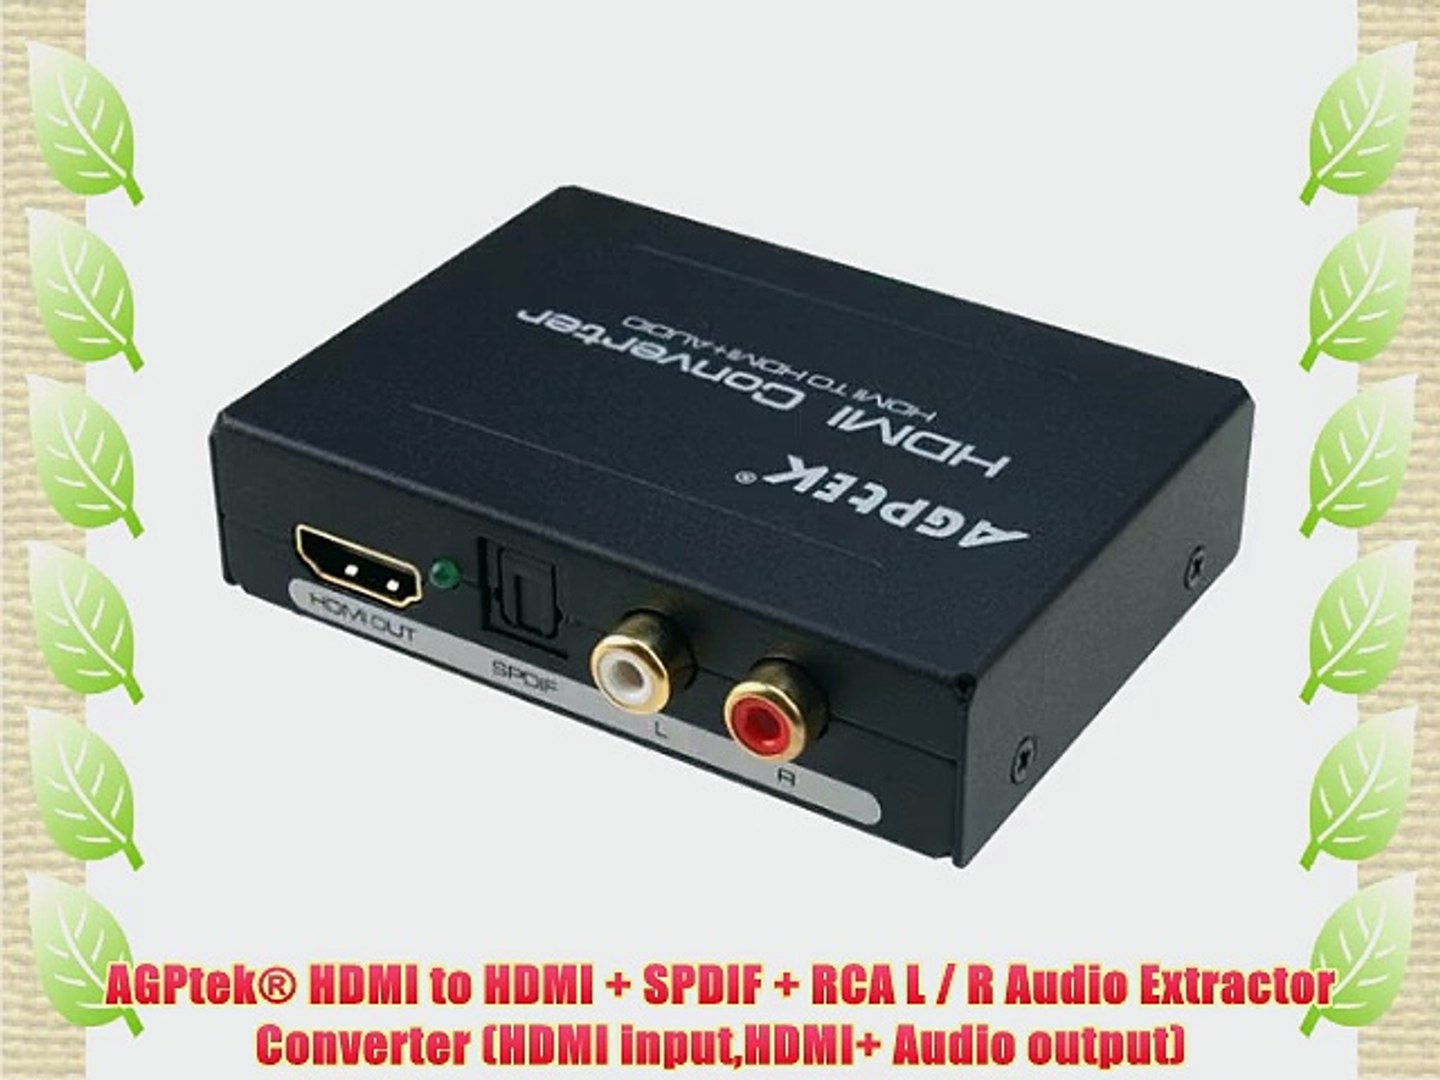 AGPtek? HDMI to HDMI SPDIF RCA L / R Audio Extractor Converter (HDMI  inputHDMI Audio output) - video Dailymotion